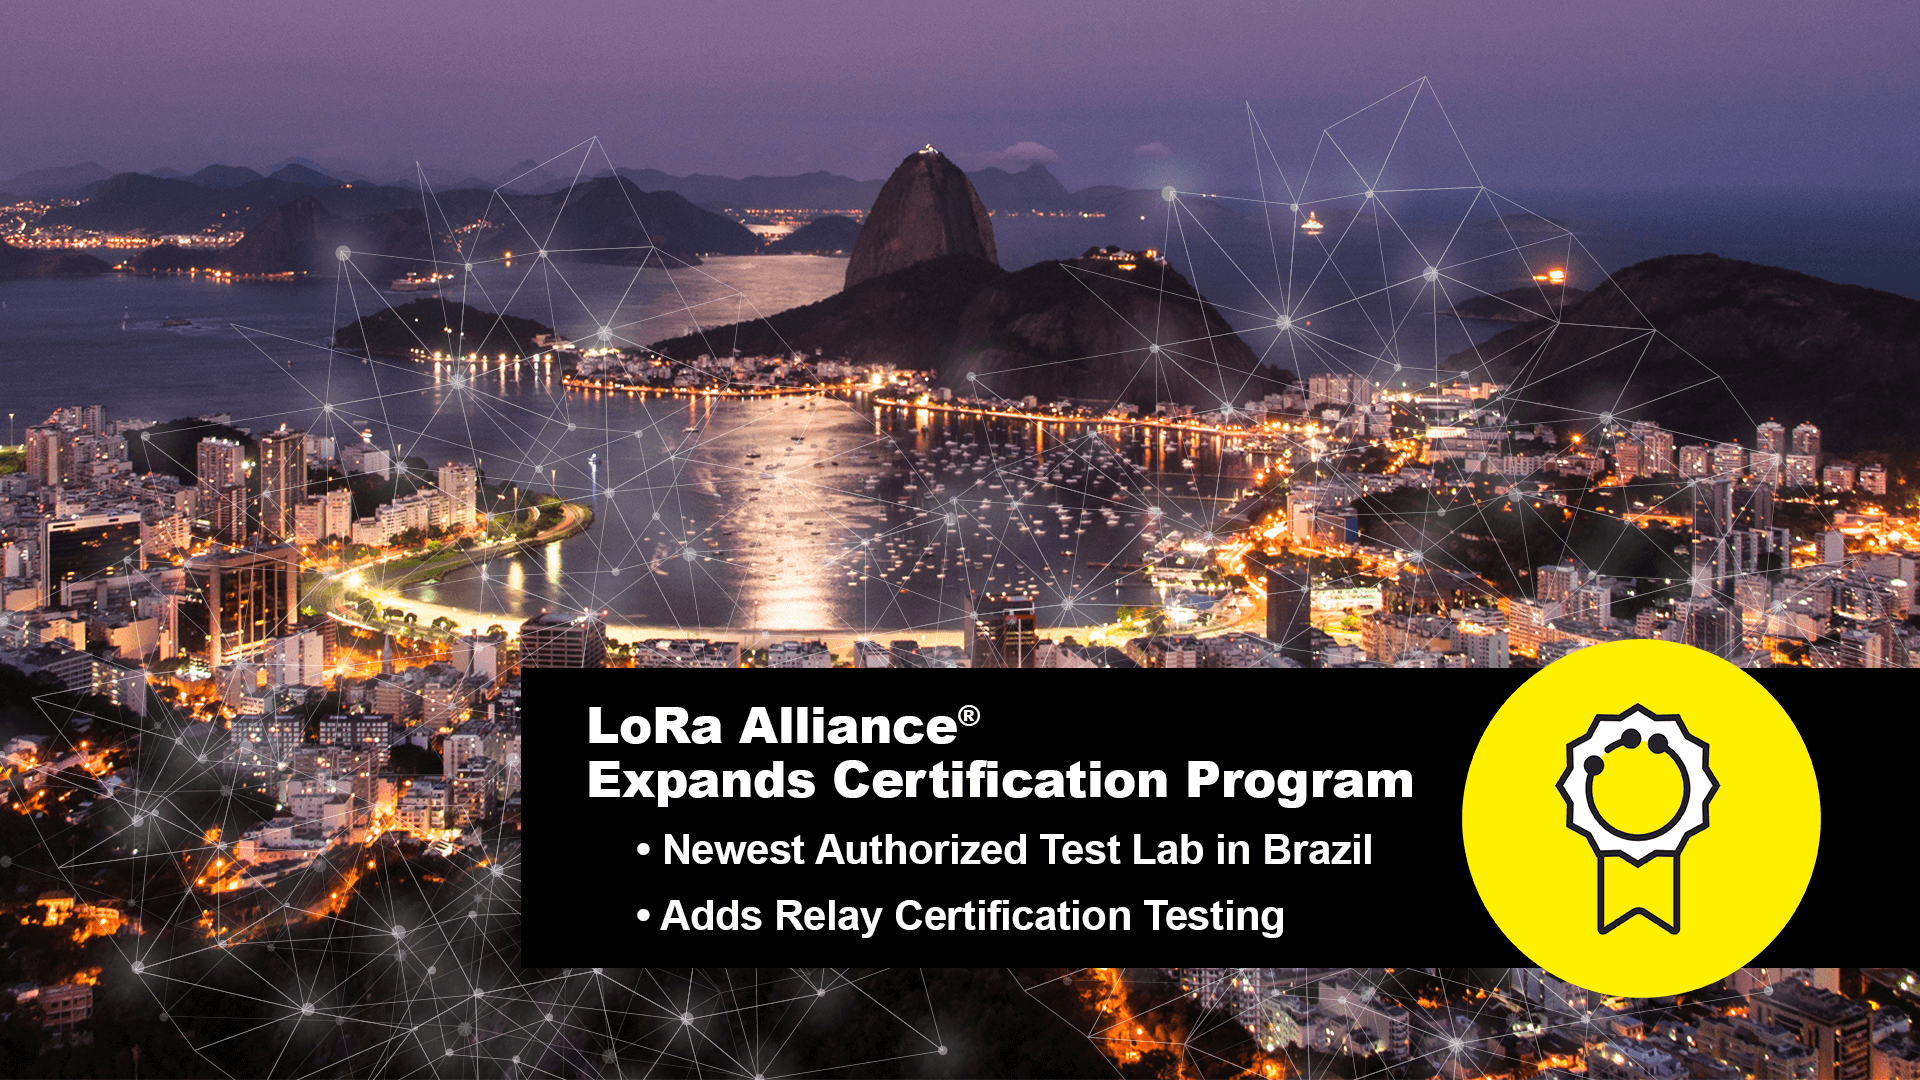 LoRa Alliance Expands Certification Program in Brazil